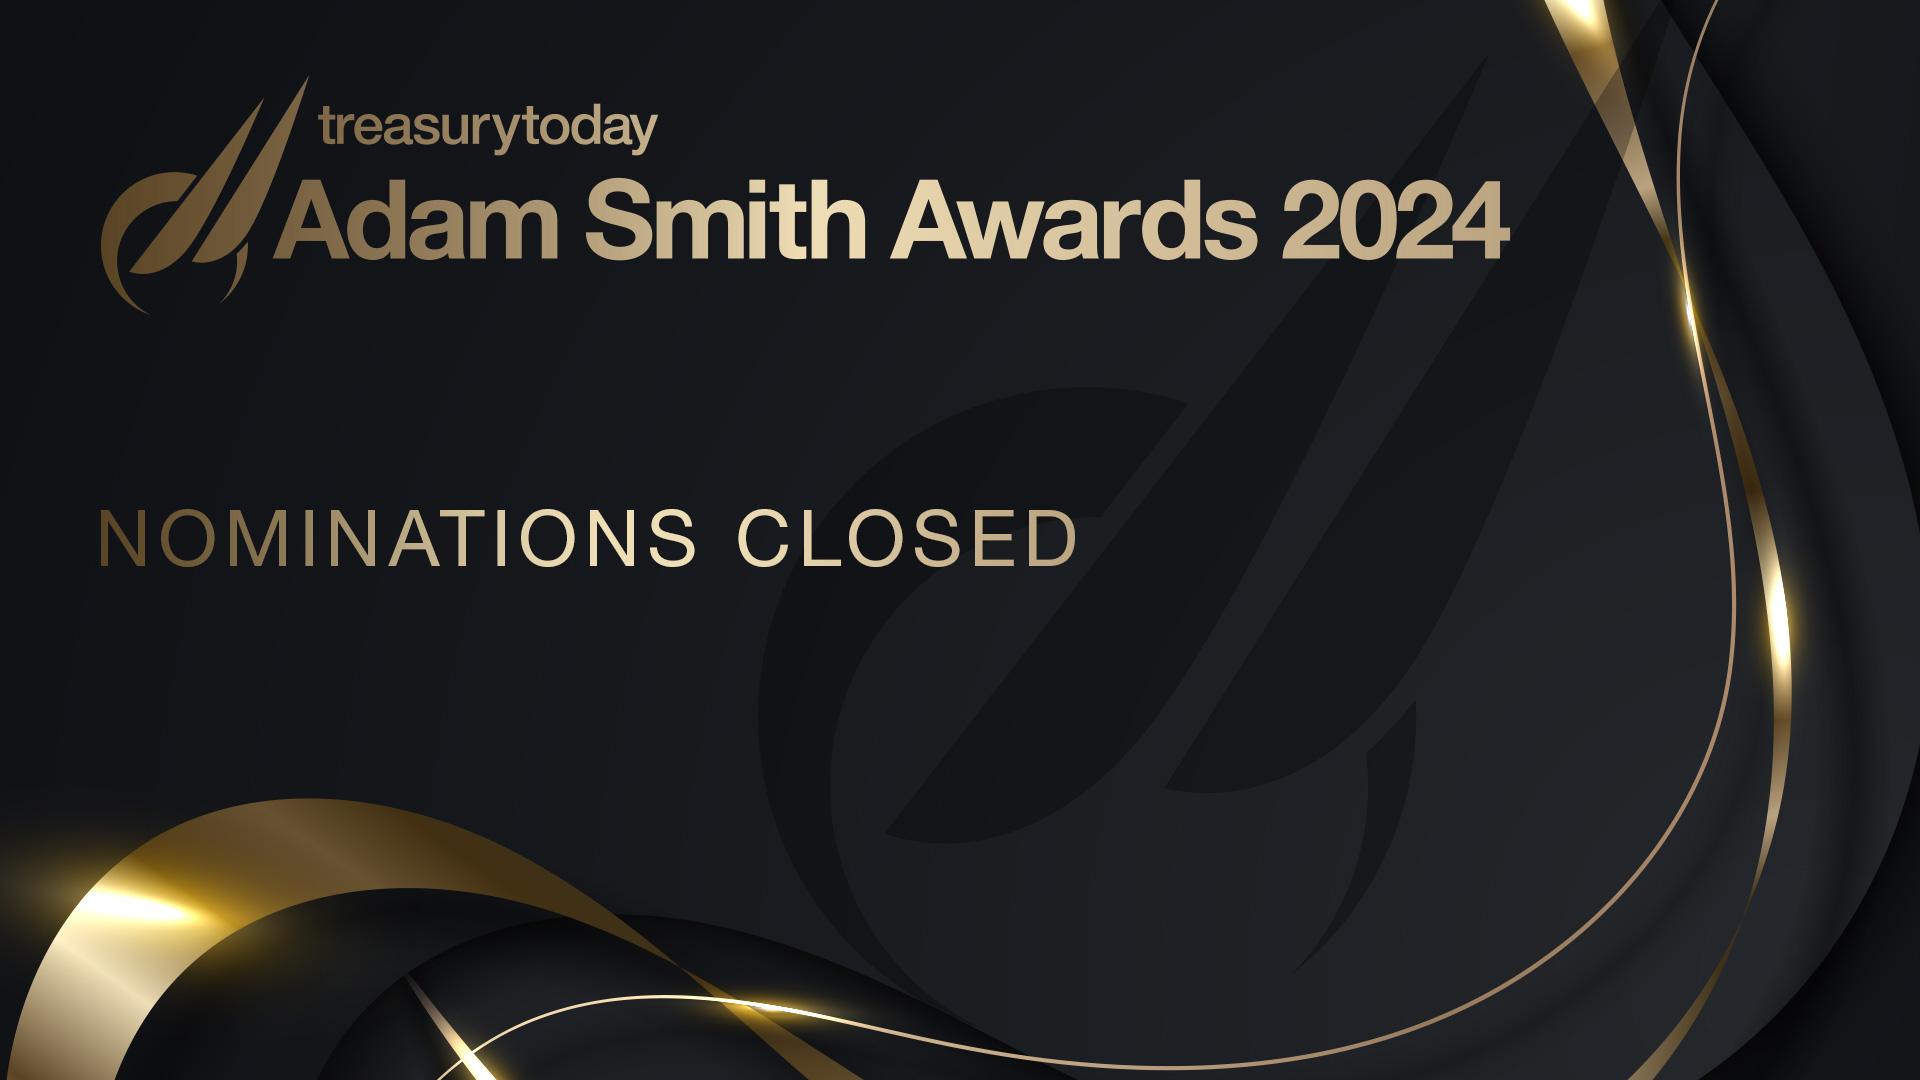 Adam Smith Awards 2024 nominations closed